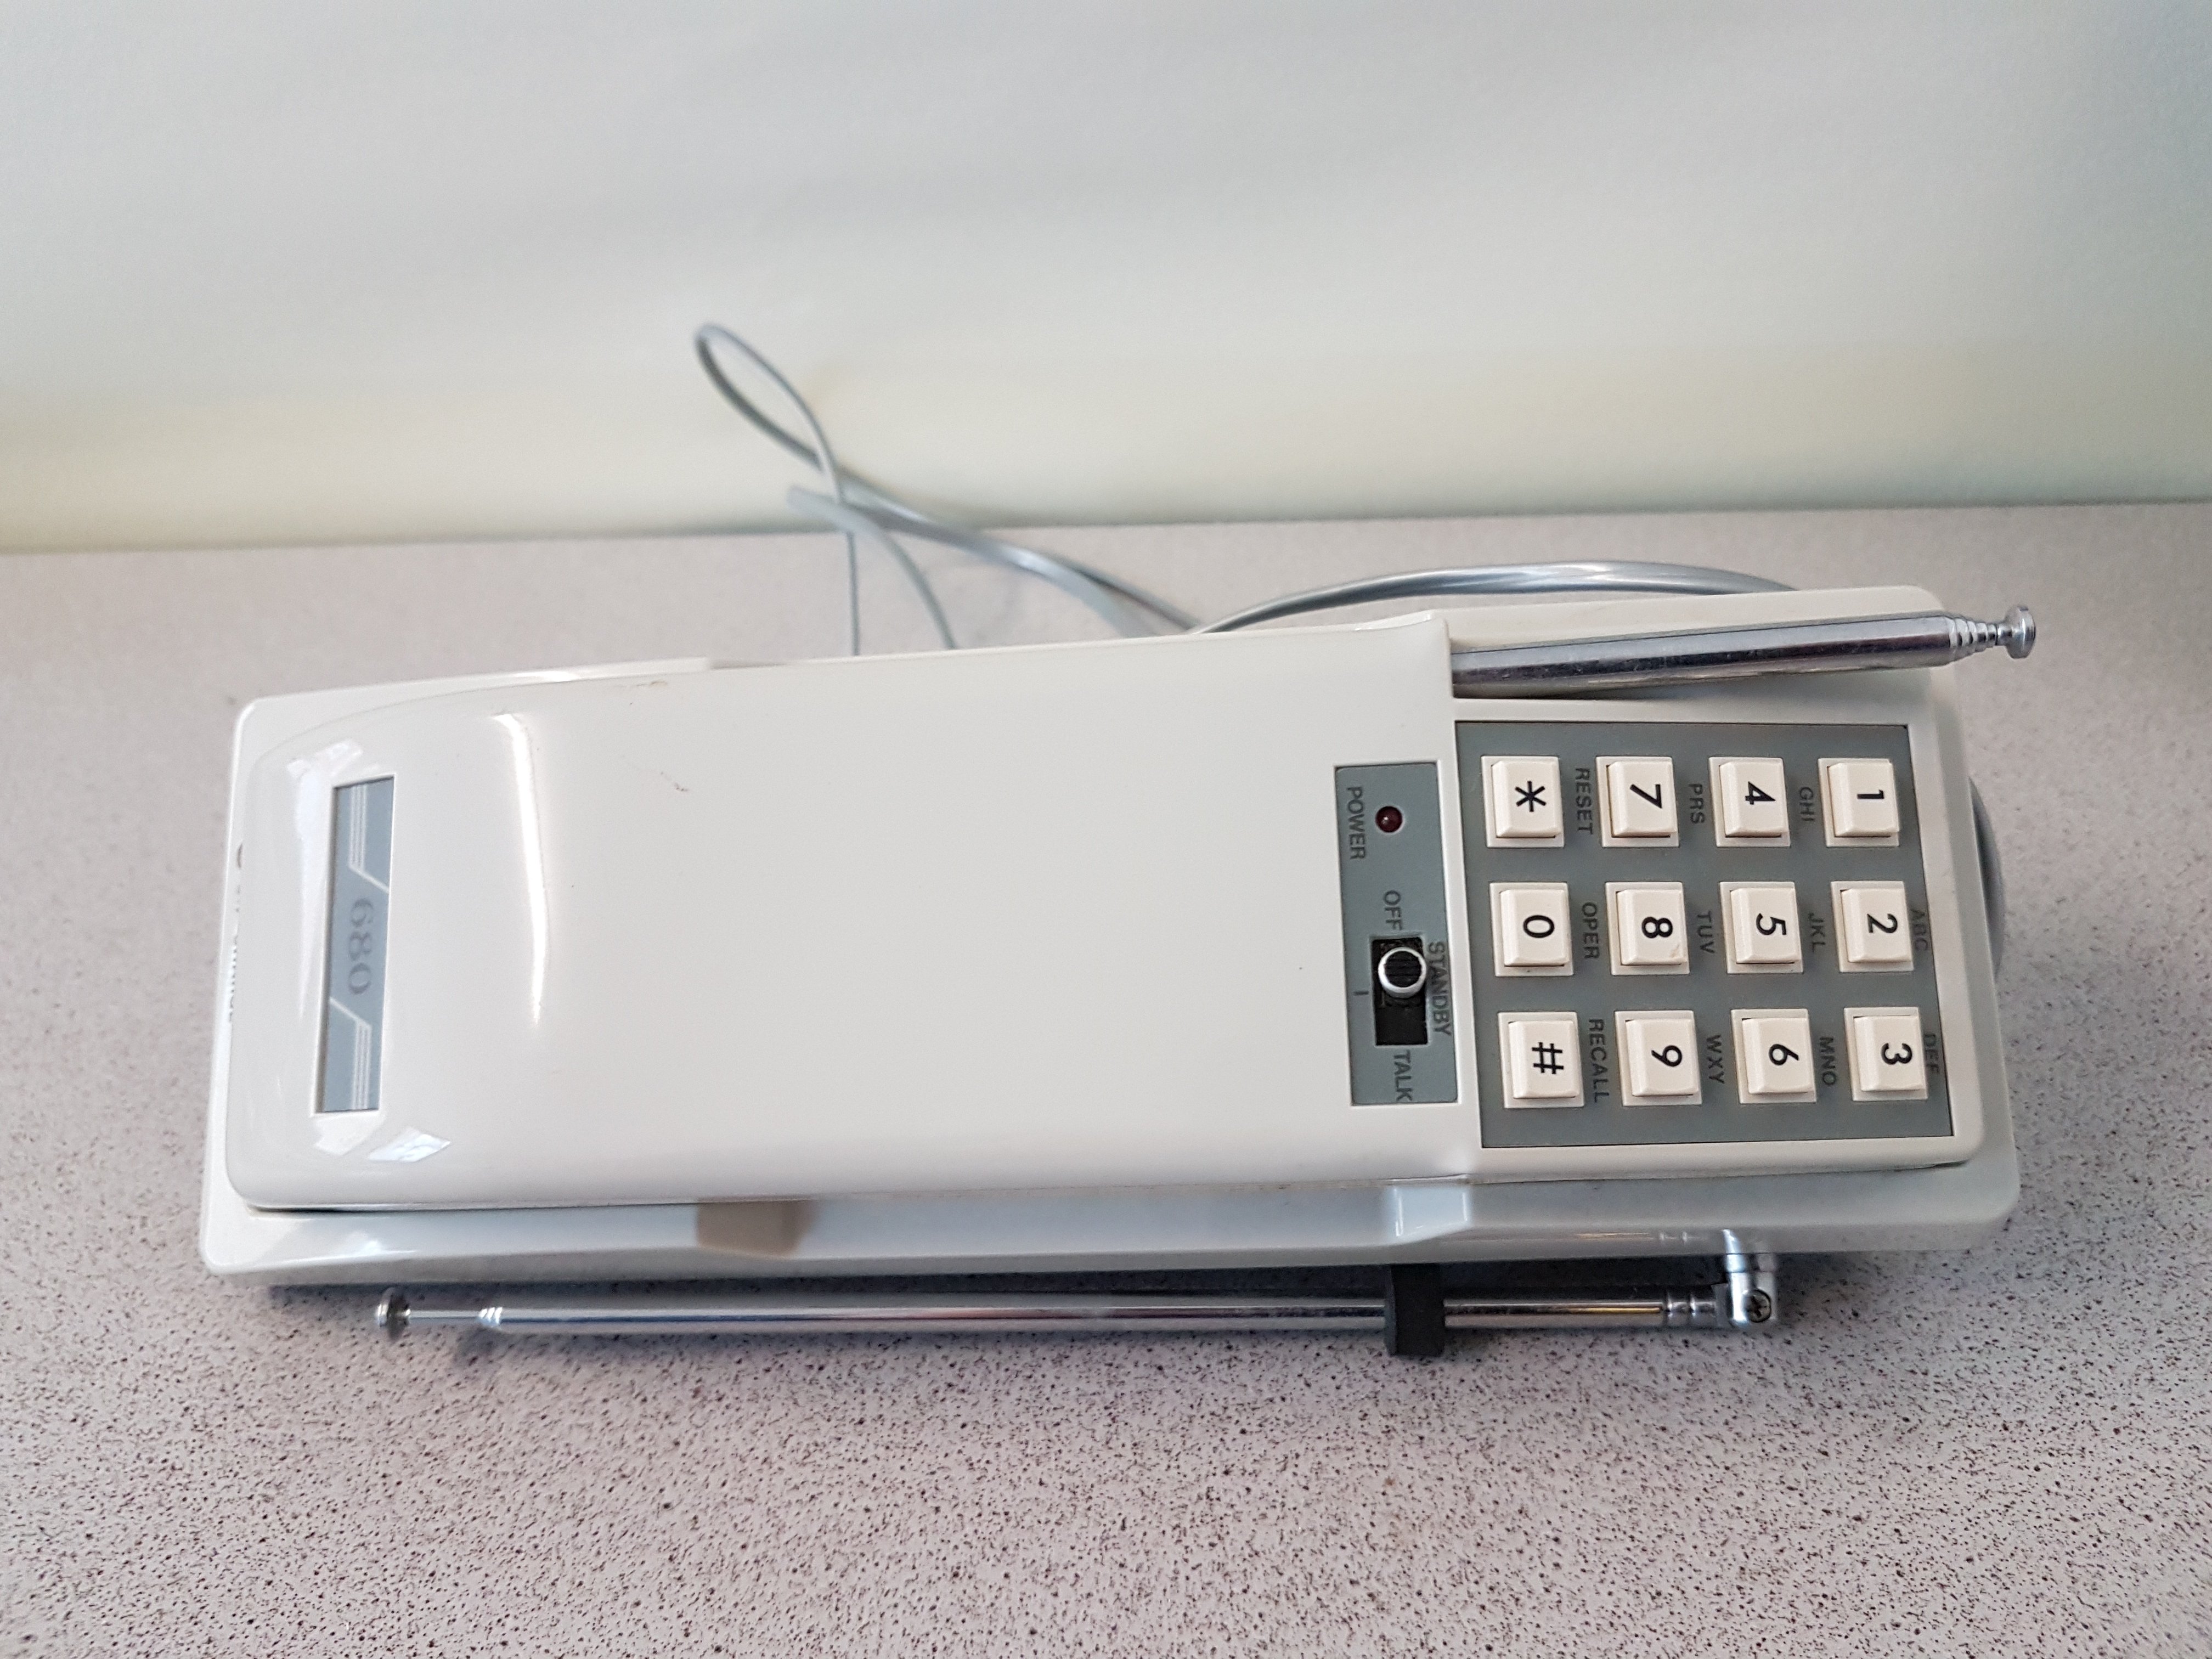 Drahtloses Haustelefon 680 (museum comp:ex CC BY-NC-SA)